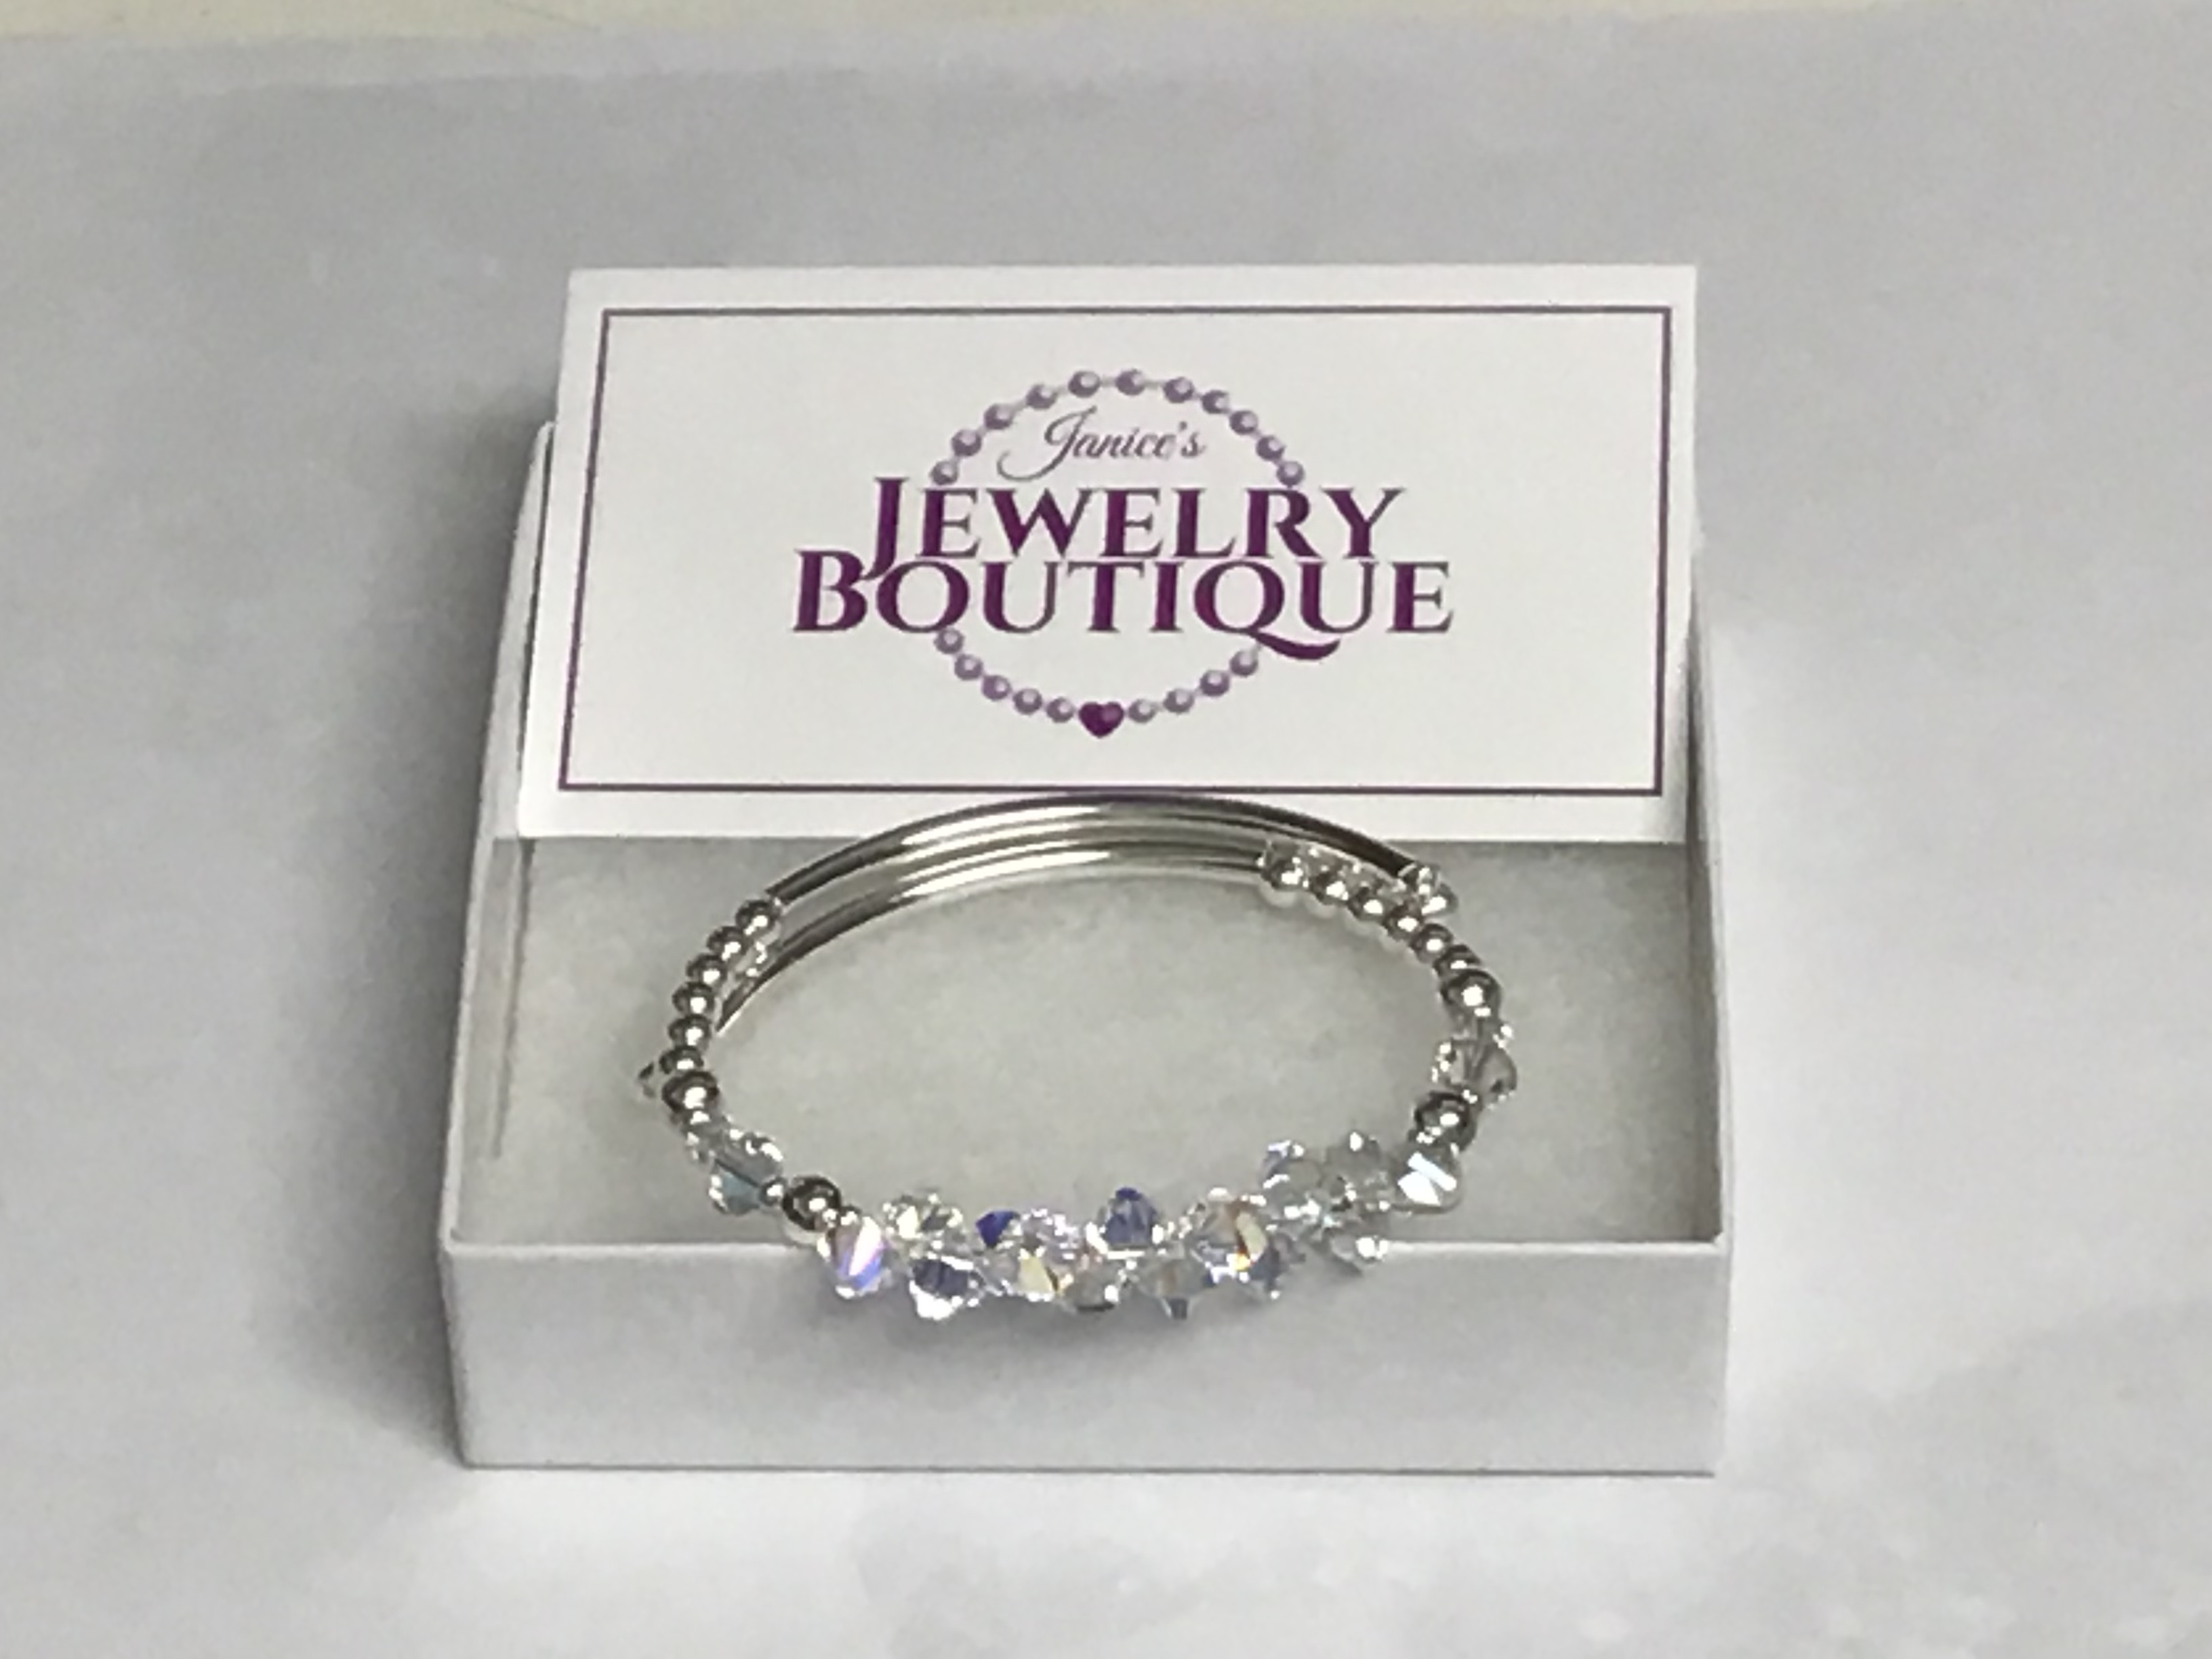 Janice's Jewelry Boutique bracelet